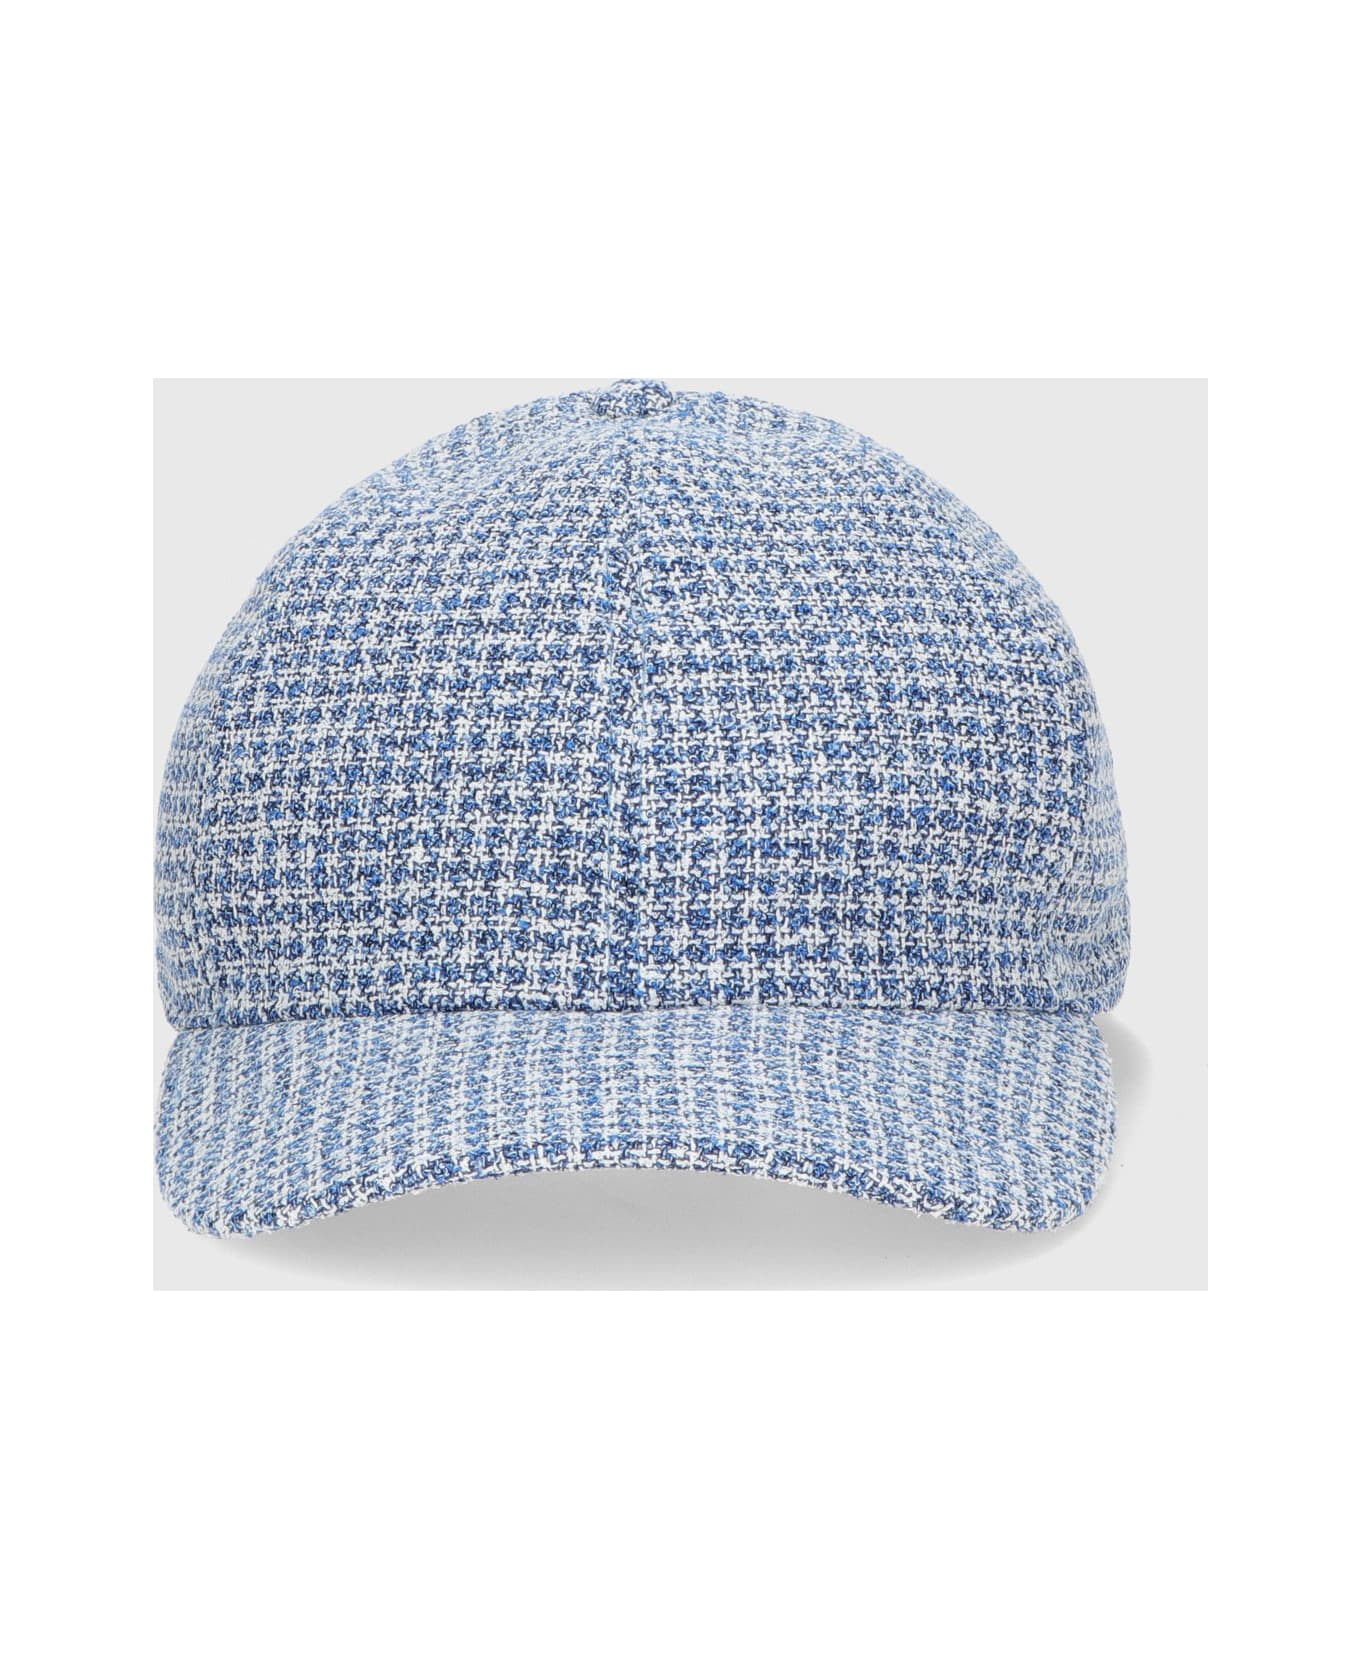 Borsalino Hiker Baseball Cap - HOUNDSTOOTH BLUE/WHITE 帽子